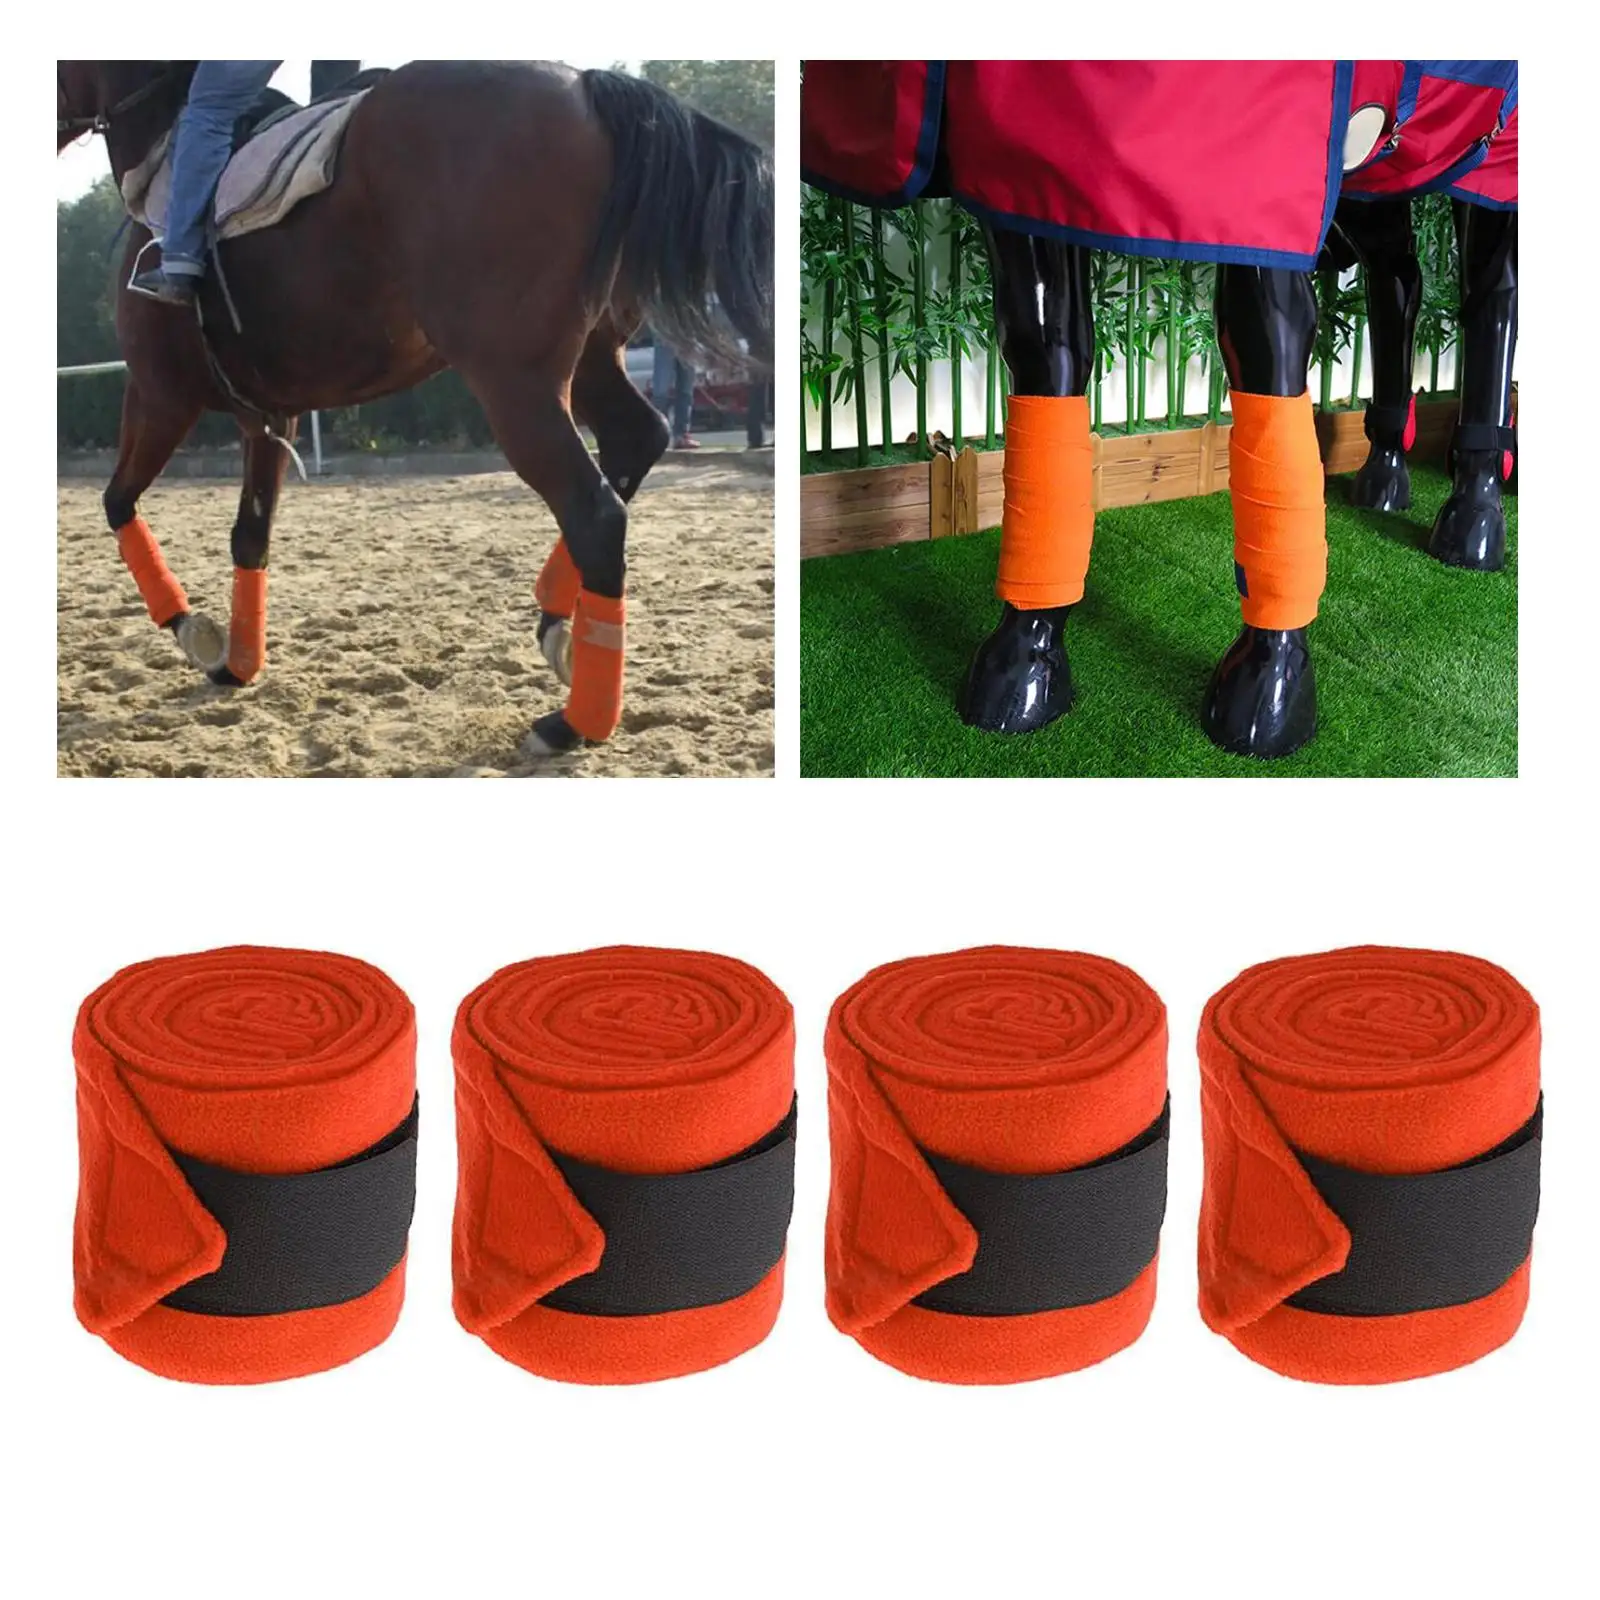 4 Pieces Horse Leg Wraps Sticky Strap Soft Plush Equestrian Accessories